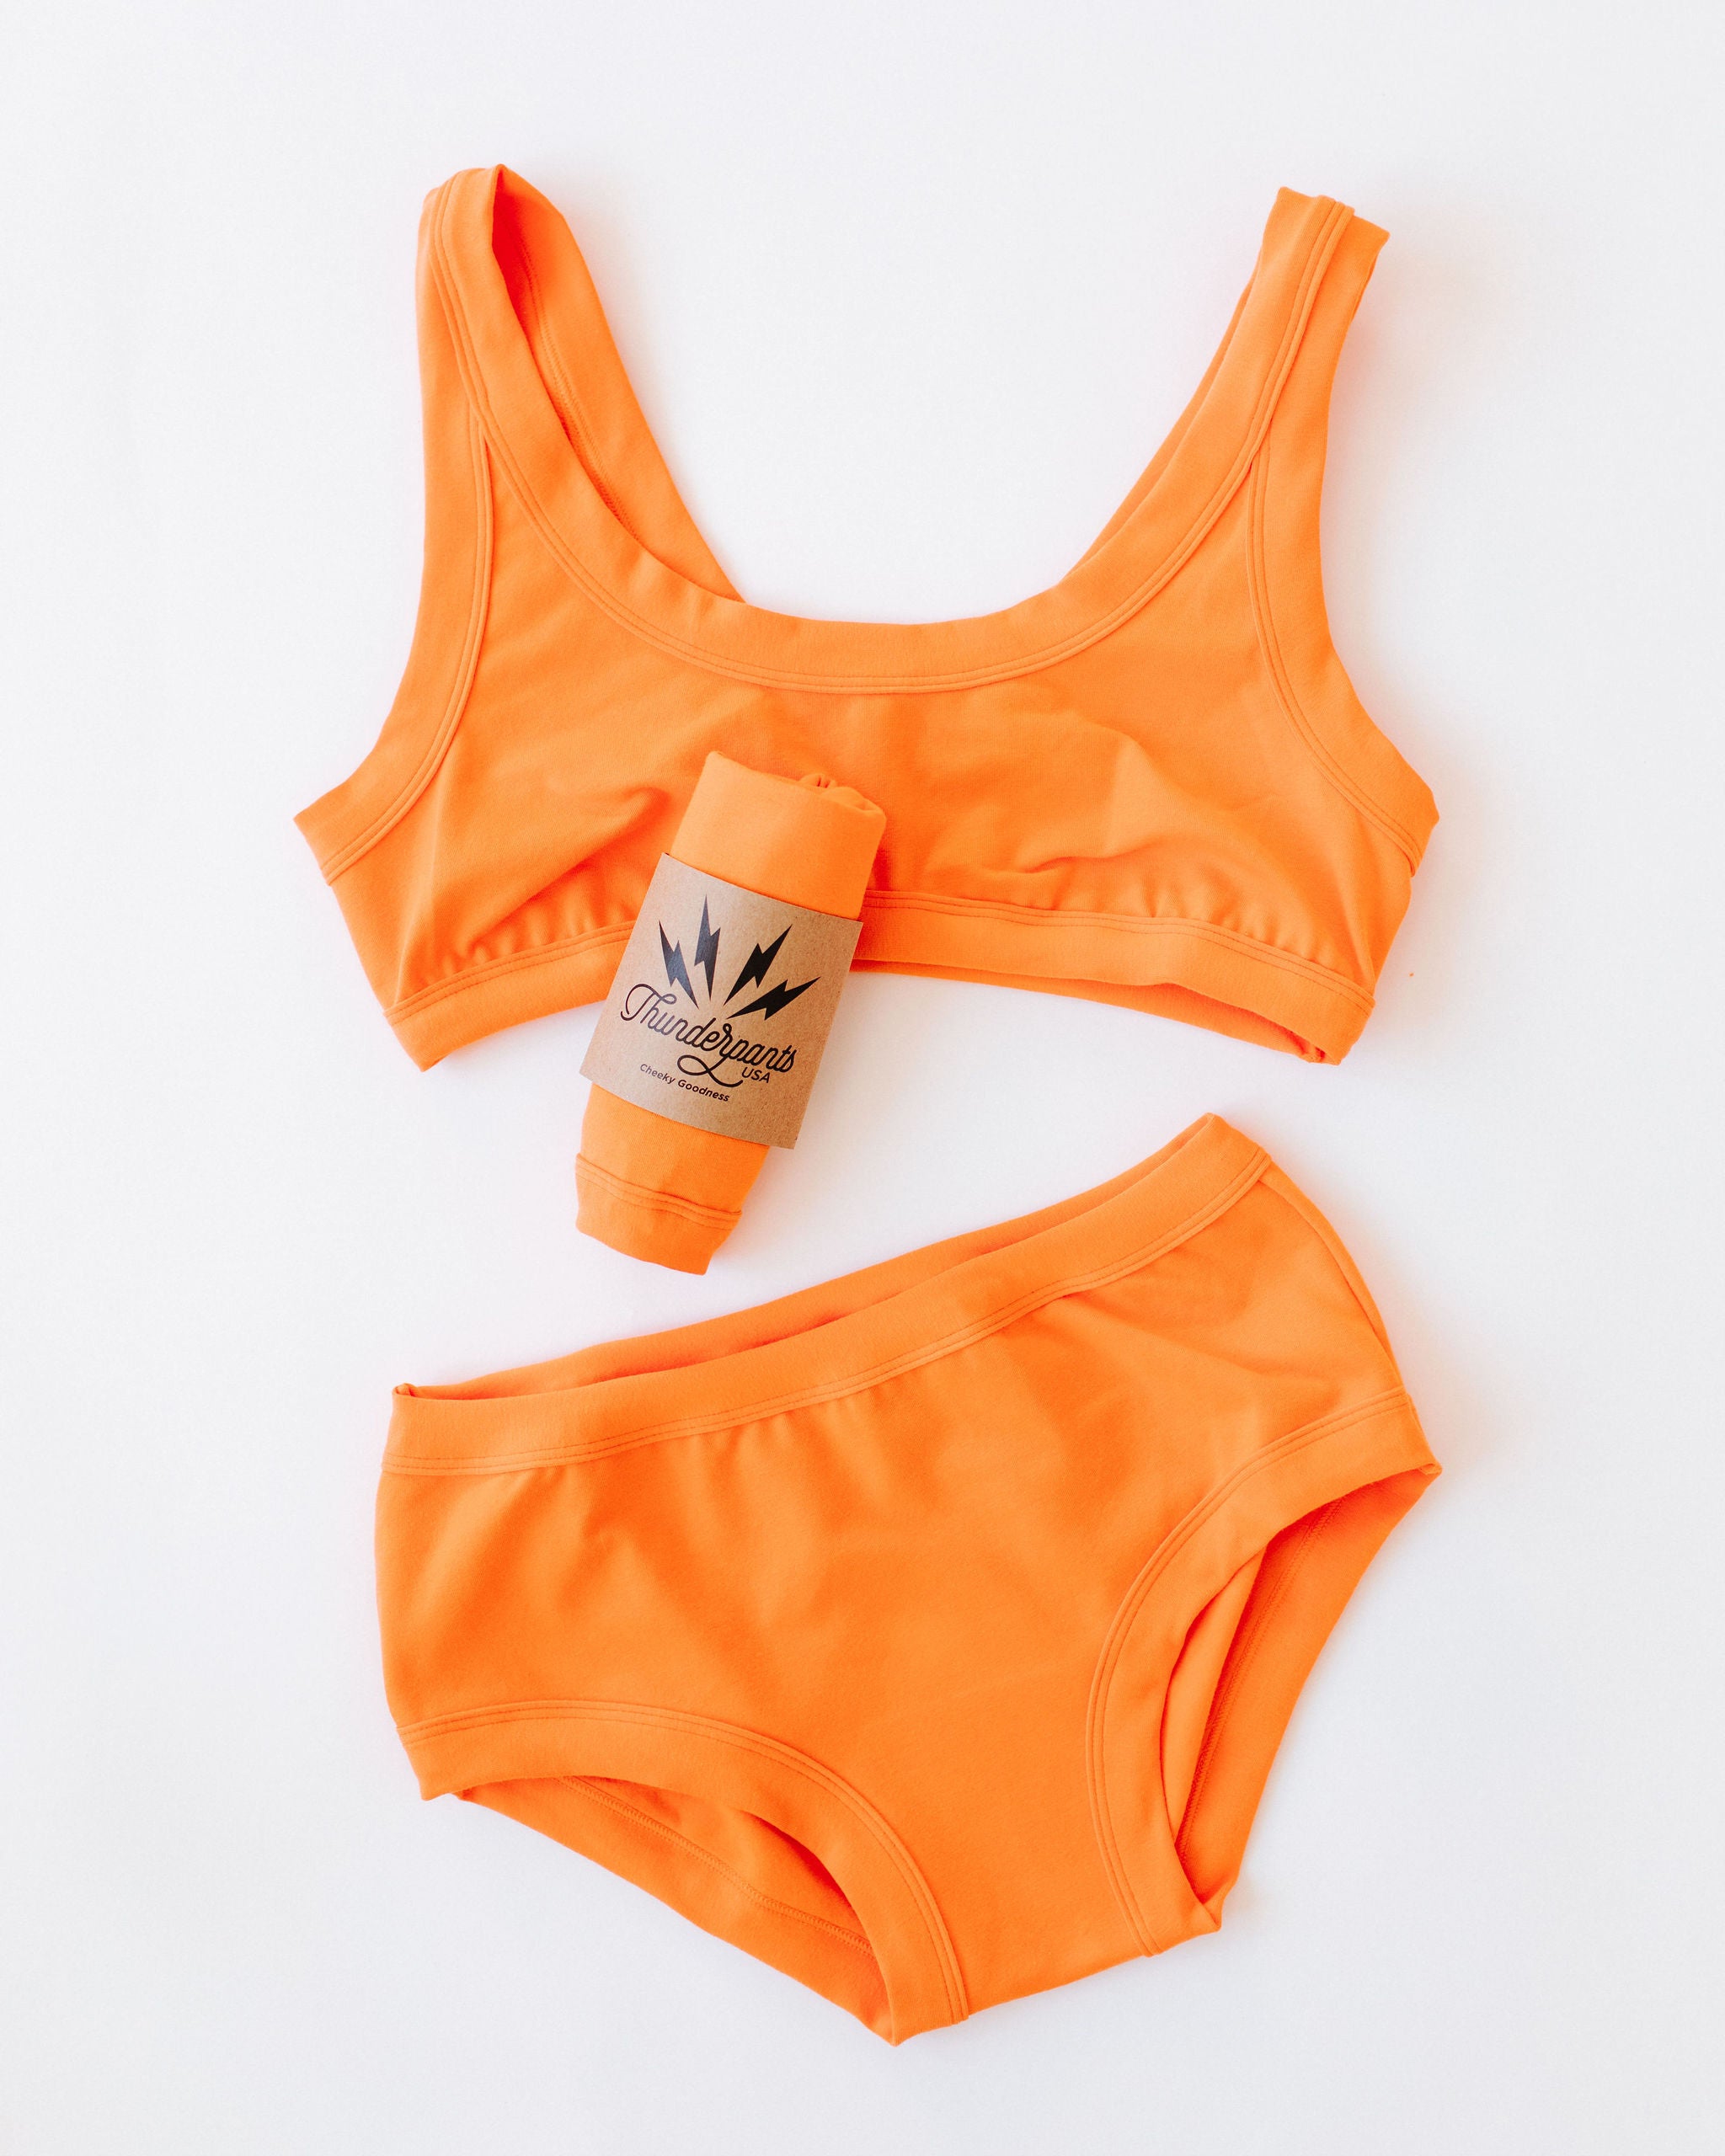 Flat lat of Thunderpants Original style underwear and Bralette in Oregon Sunstone orange color. 